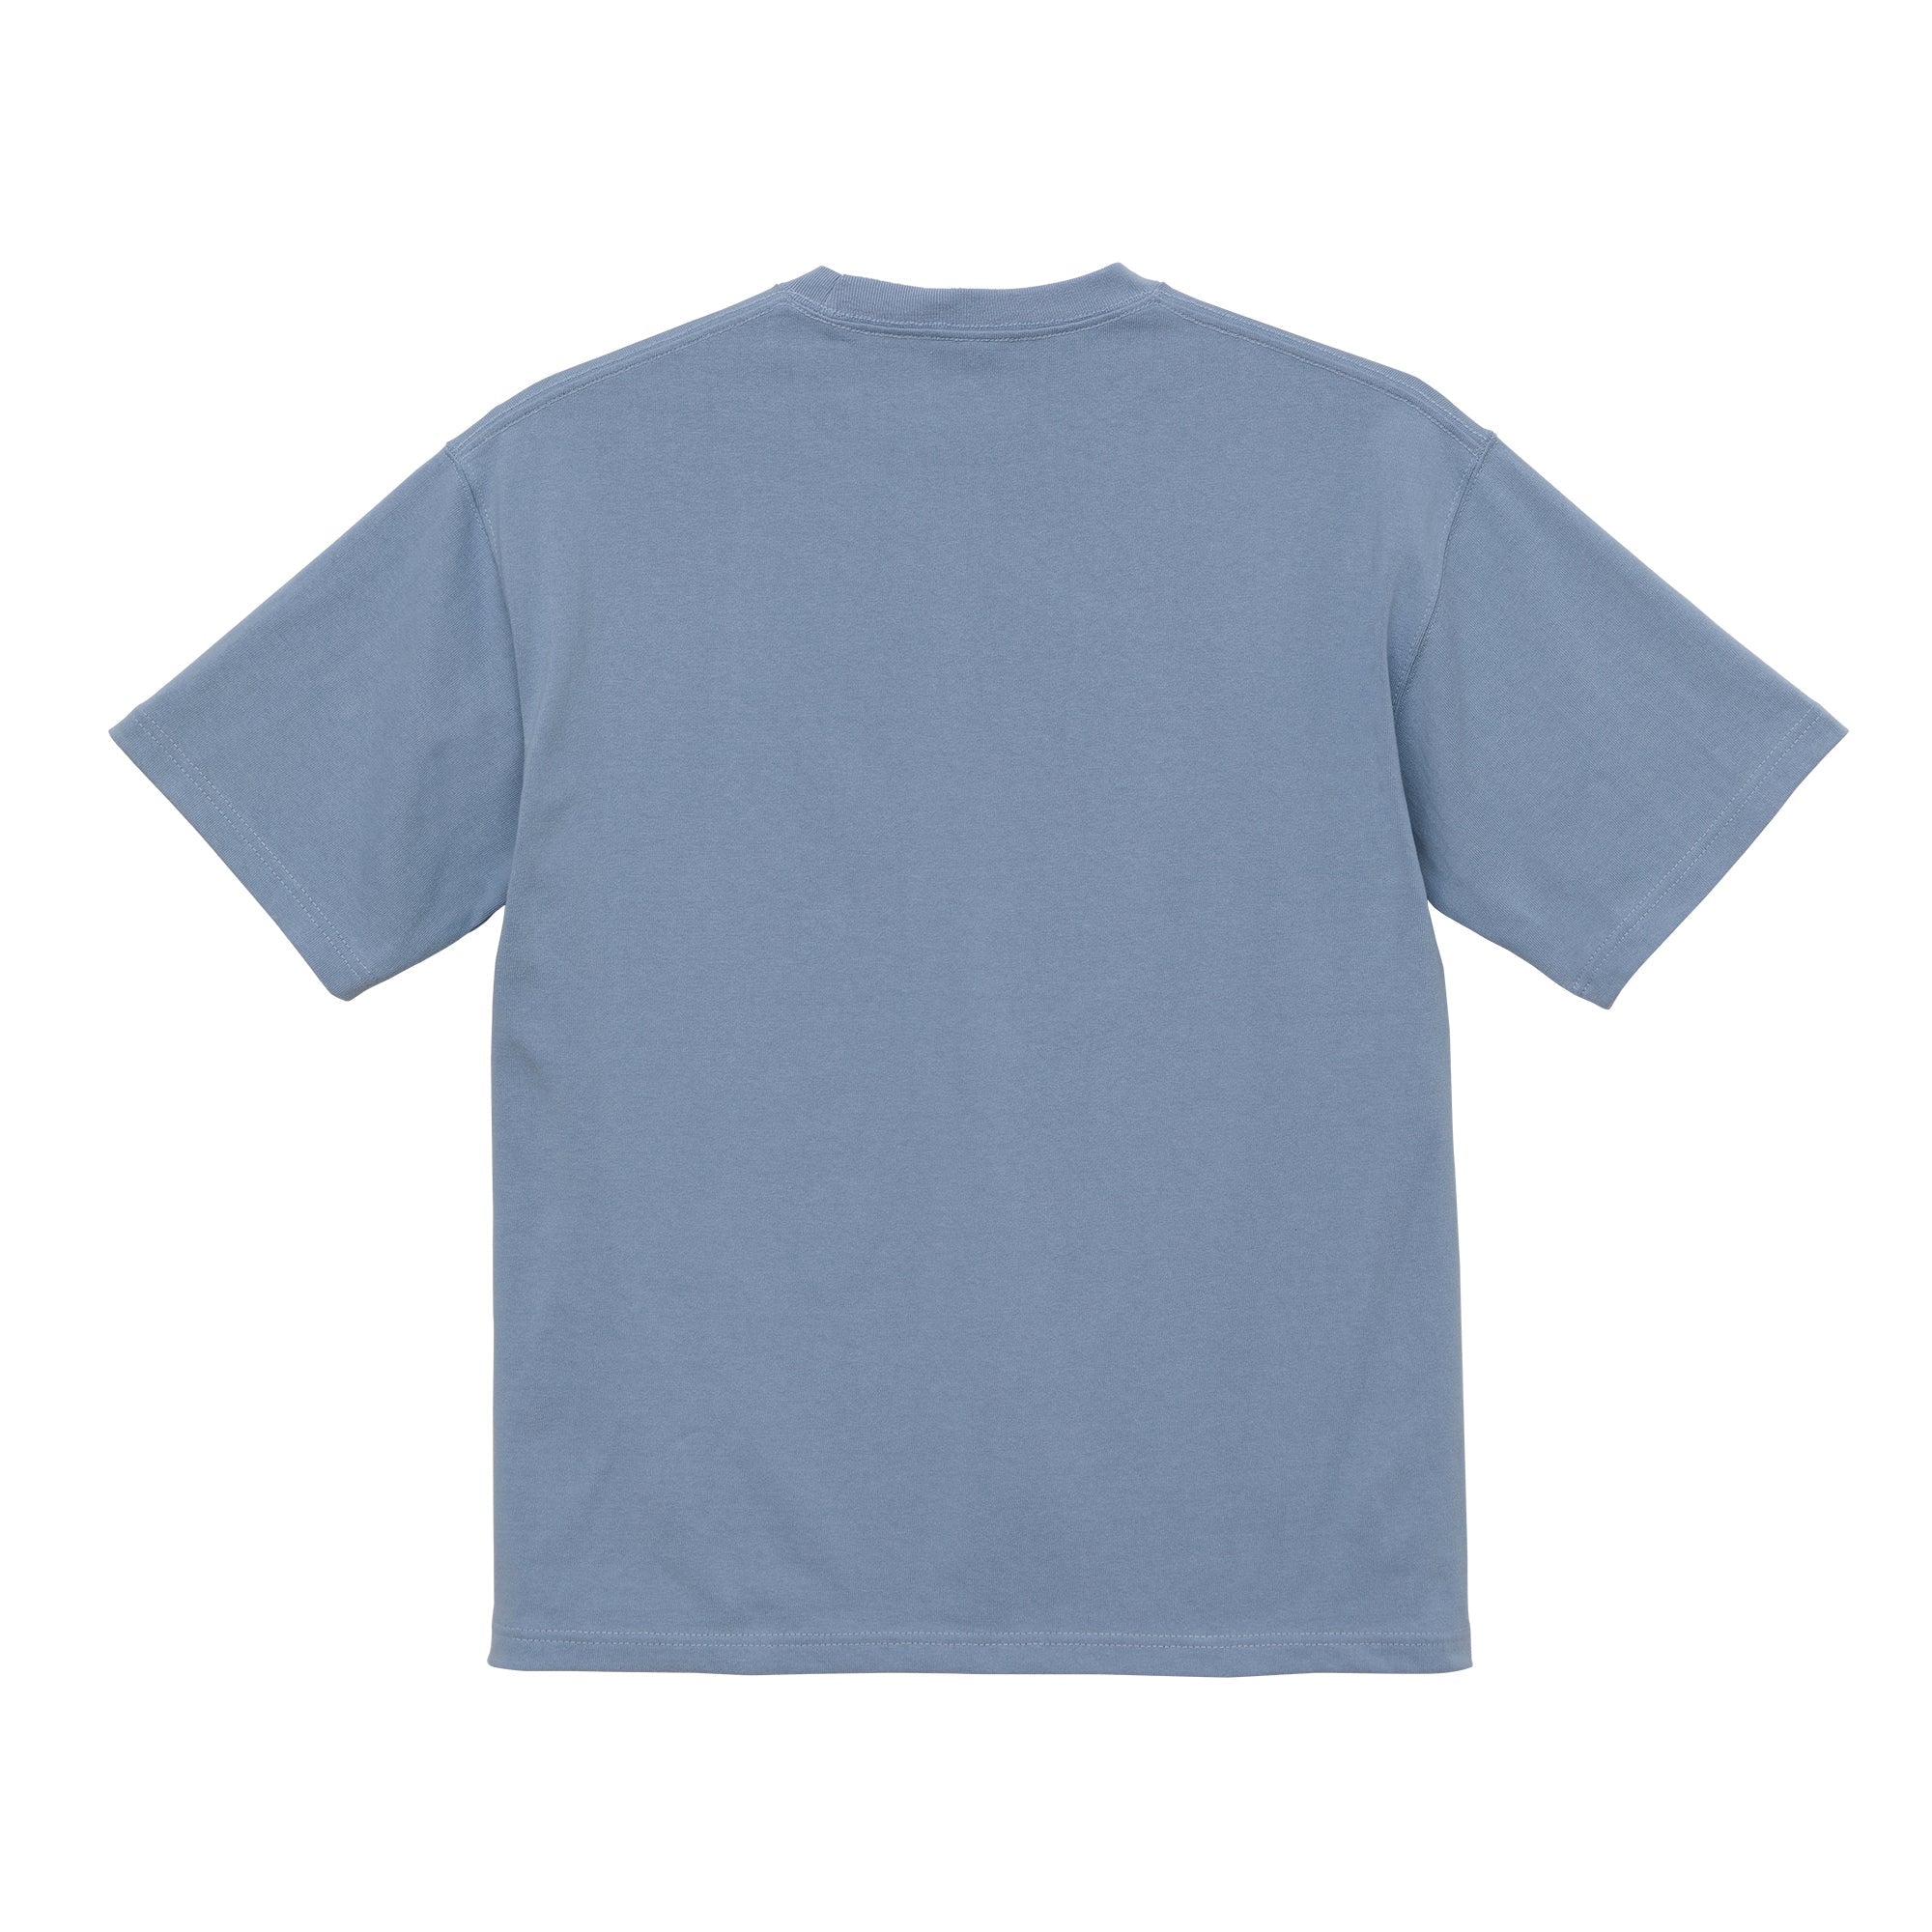 4411 - 9.1oz Magnum Weight Big Silhouette T-shirt - Acid Blue x 2